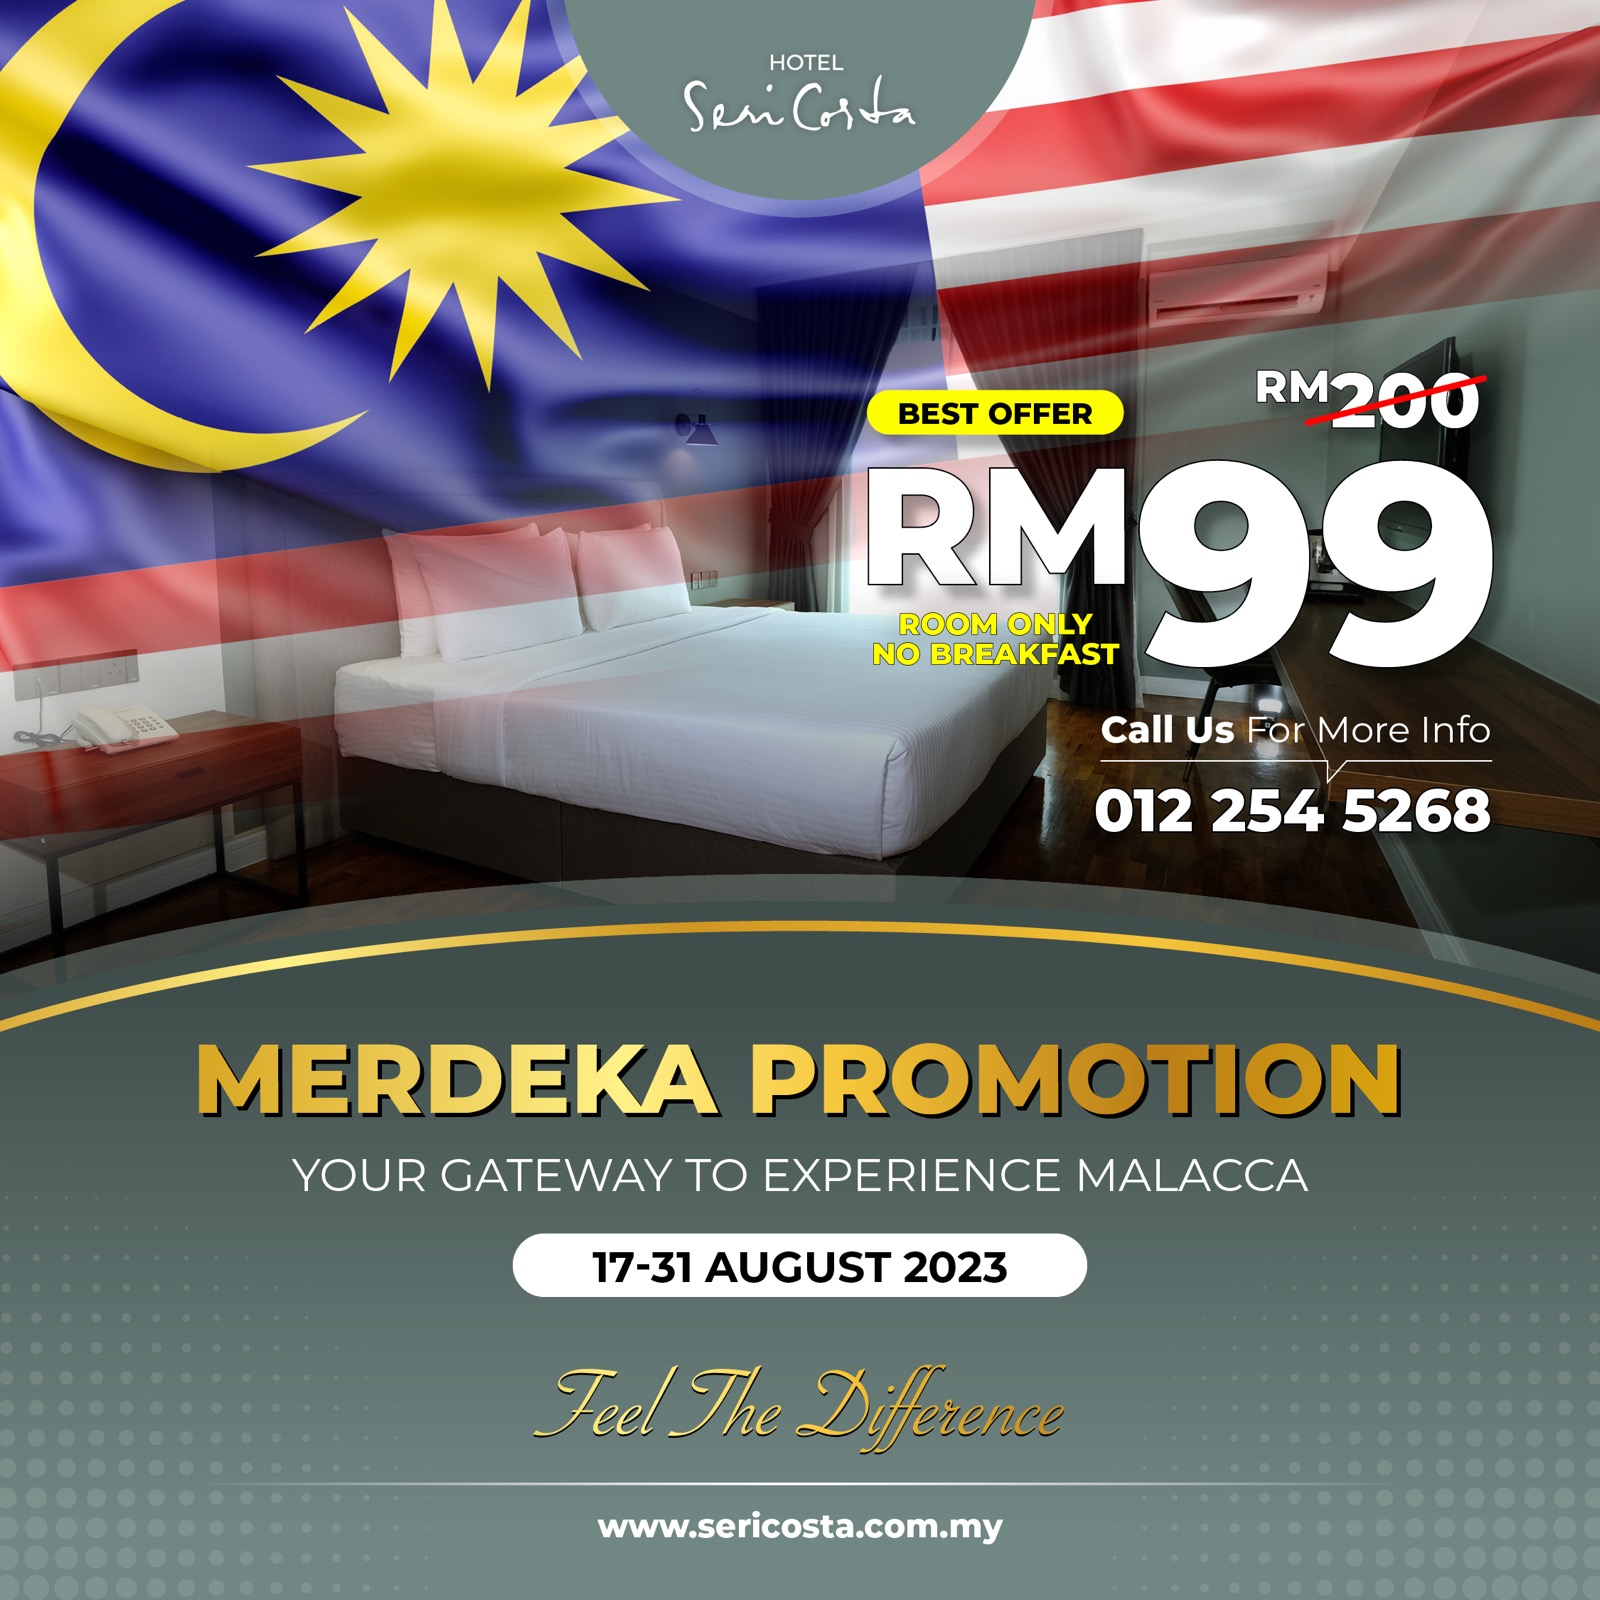 Merdeka Promotion 17-31 August 2023